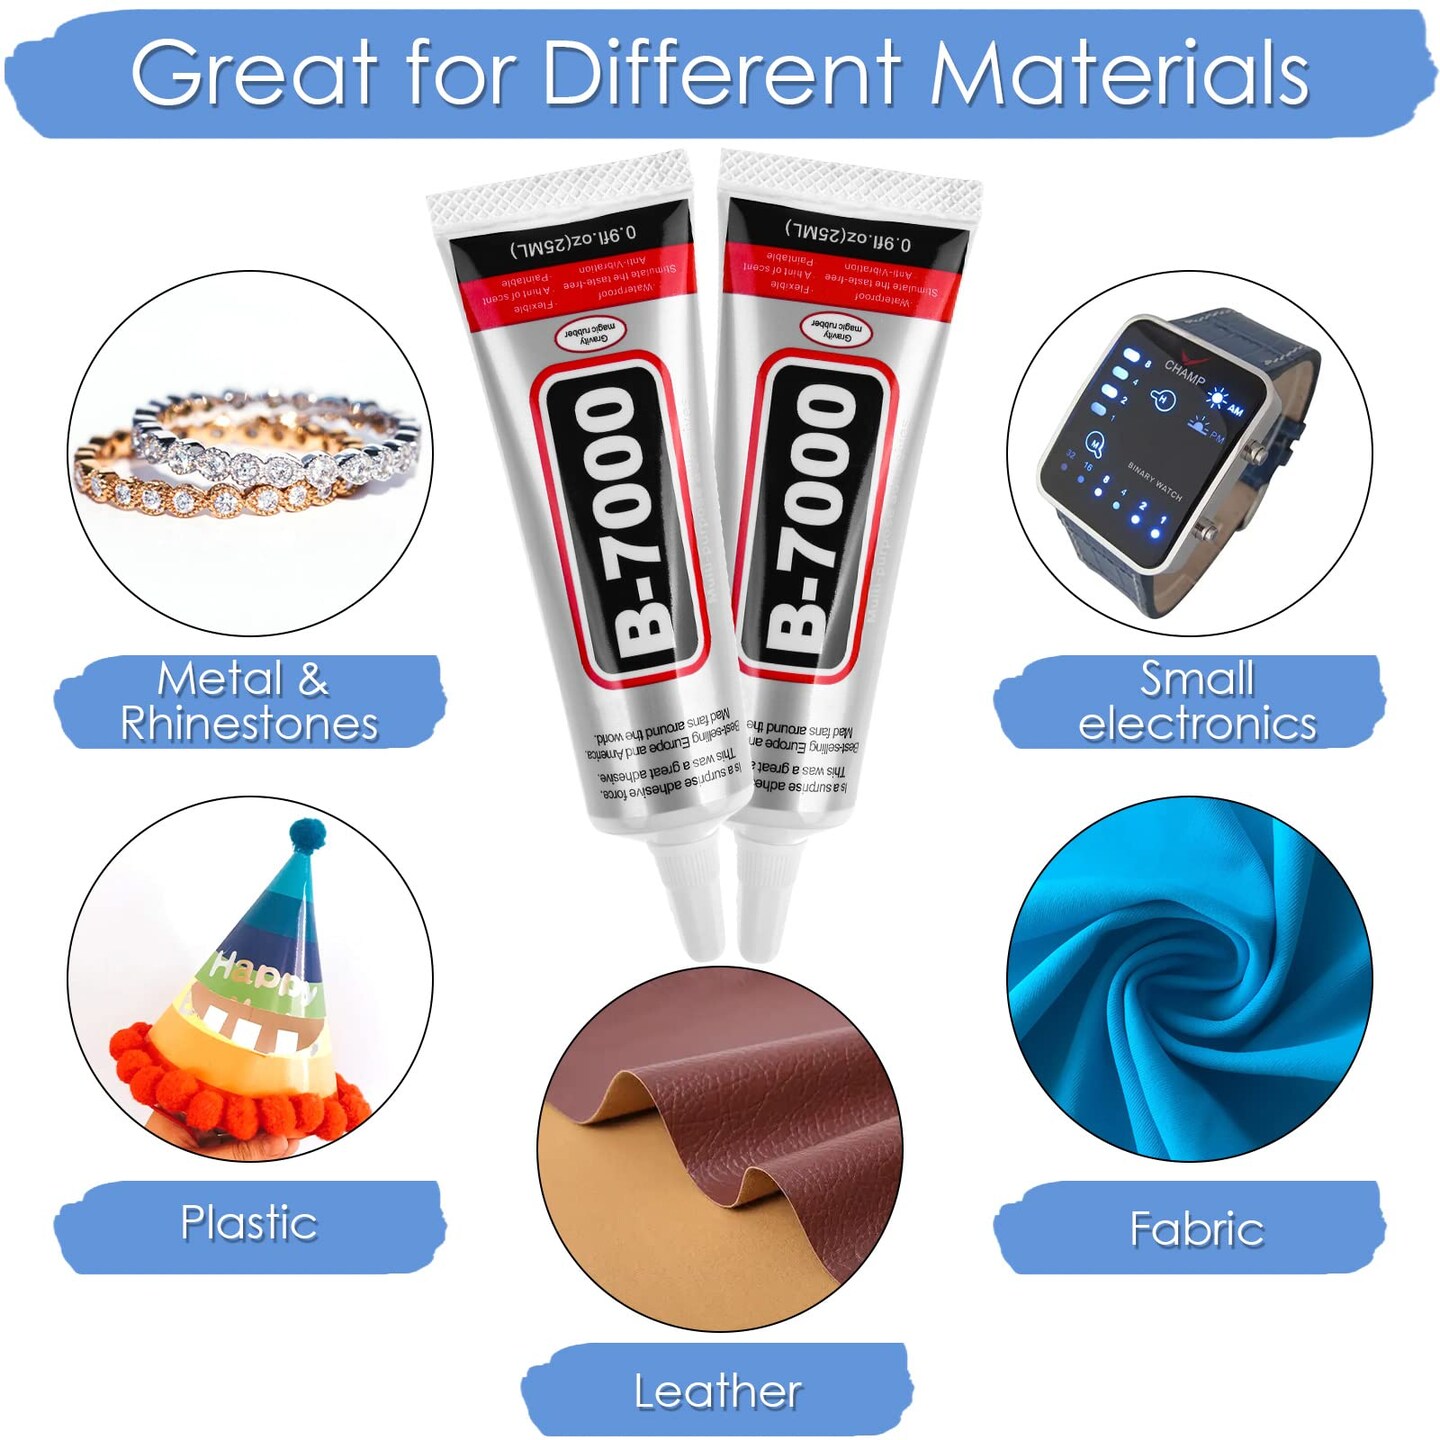 B7000 Craft Glue with Tips, Fabric Glue B7000 Rhinestone Crafts Clear  Liquid Glue Super Adhesive for Cell Phone Repair, Clothes, Metal Stone  Beads